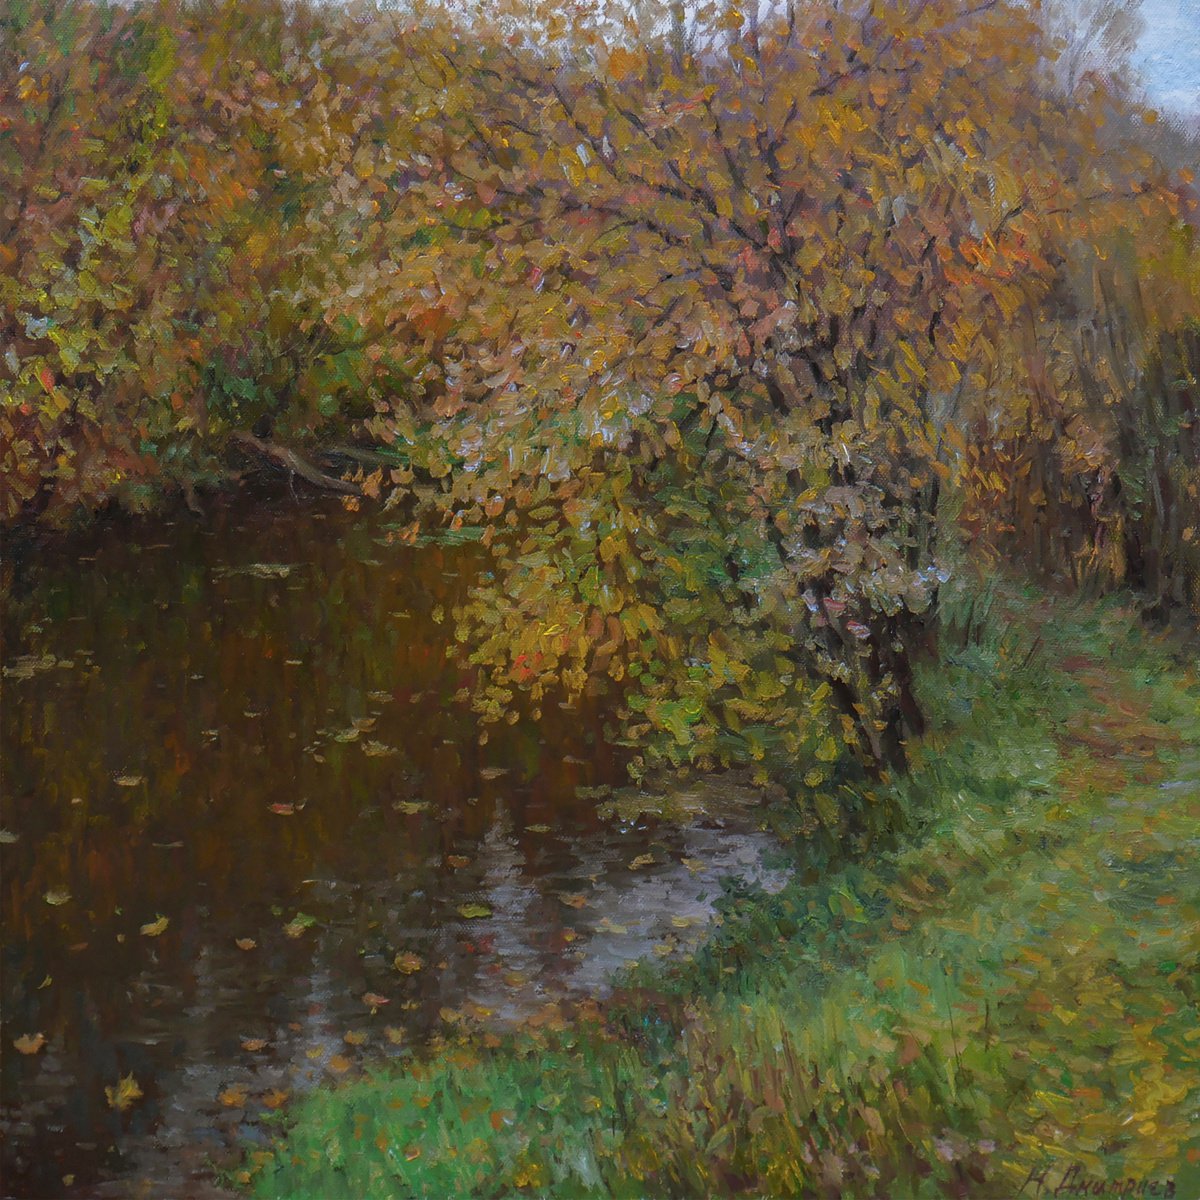 Silent Autumn - river autumn landscape painting by Nikolay Dmitriev